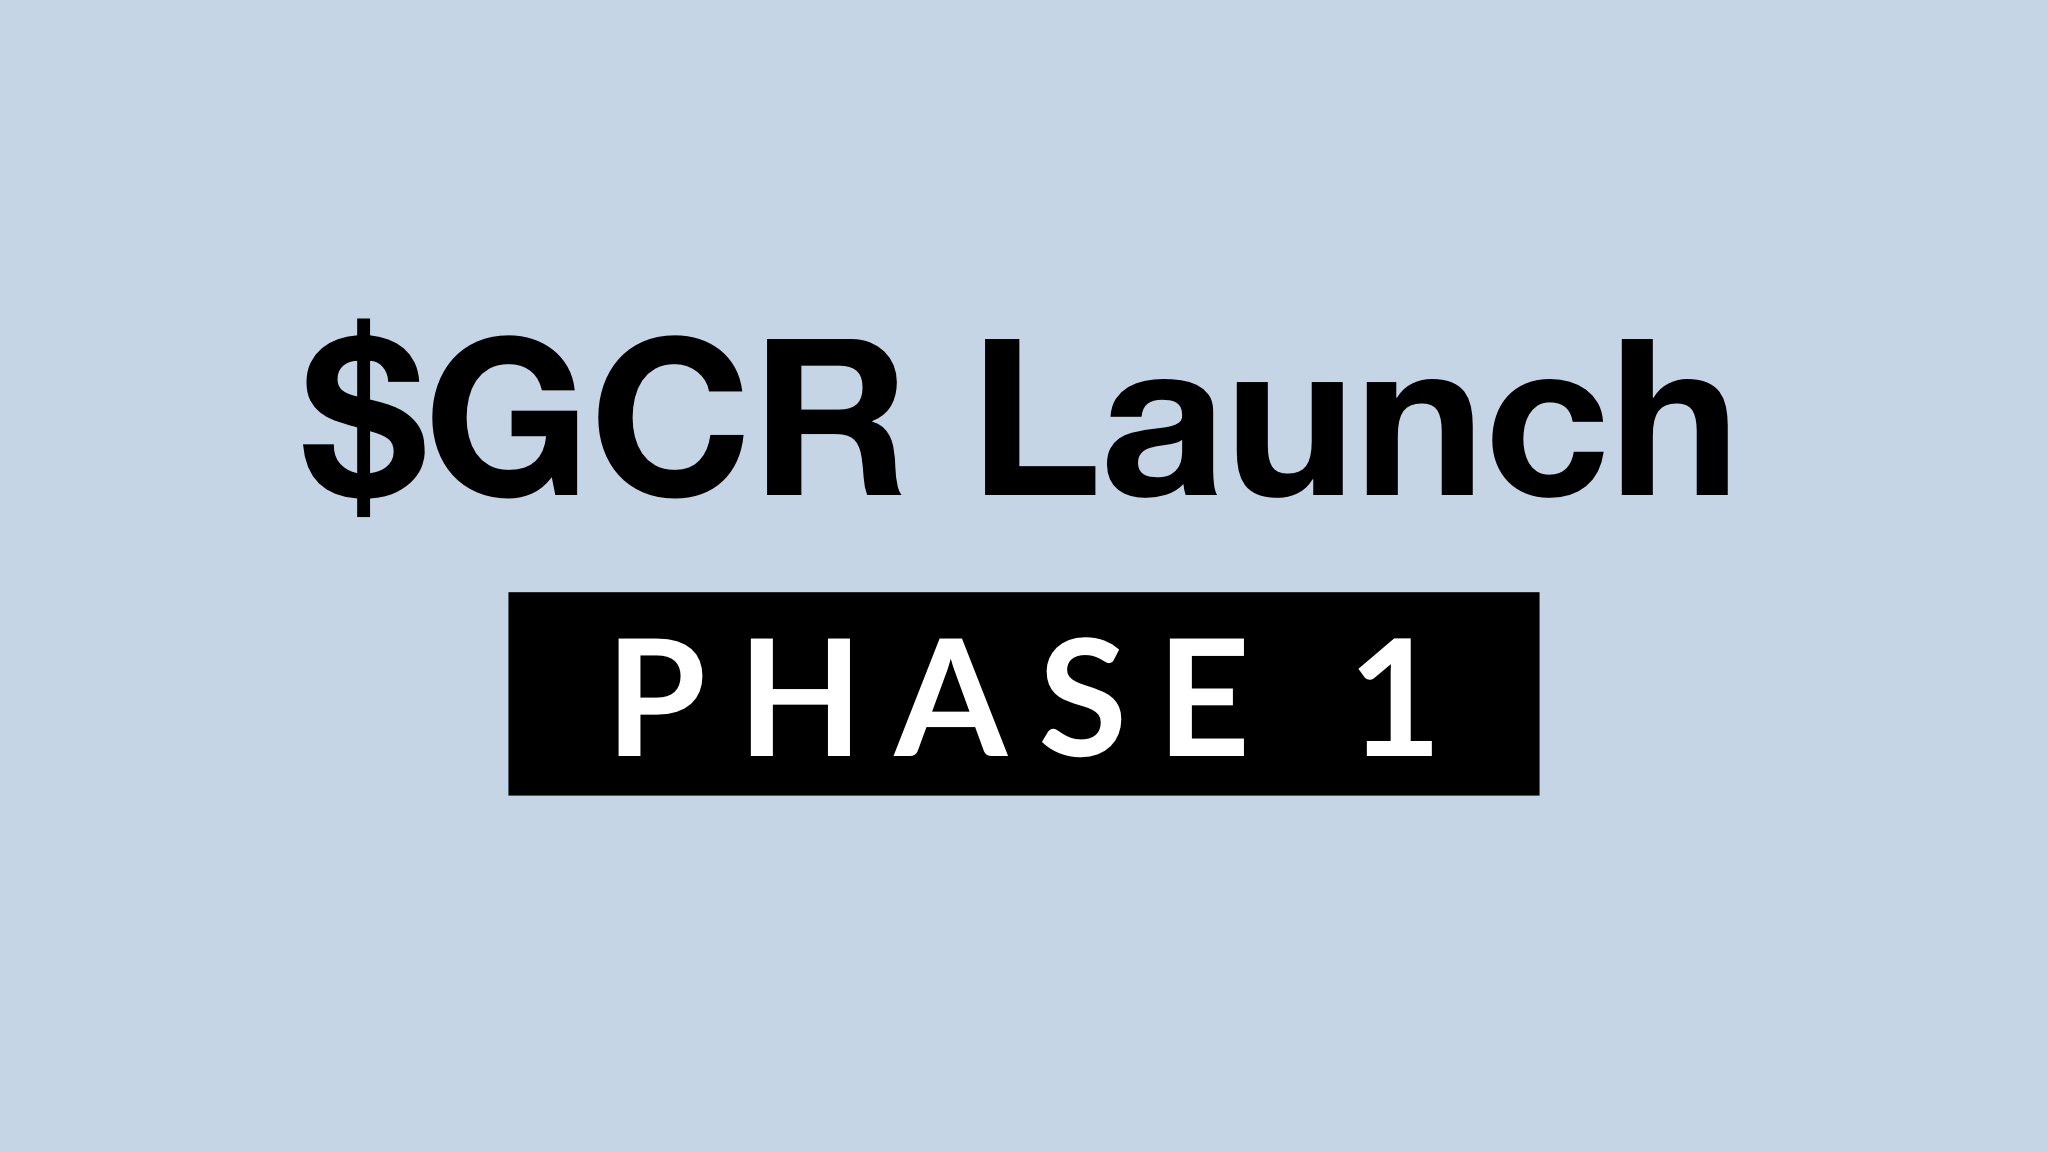 $GCR Phase 1